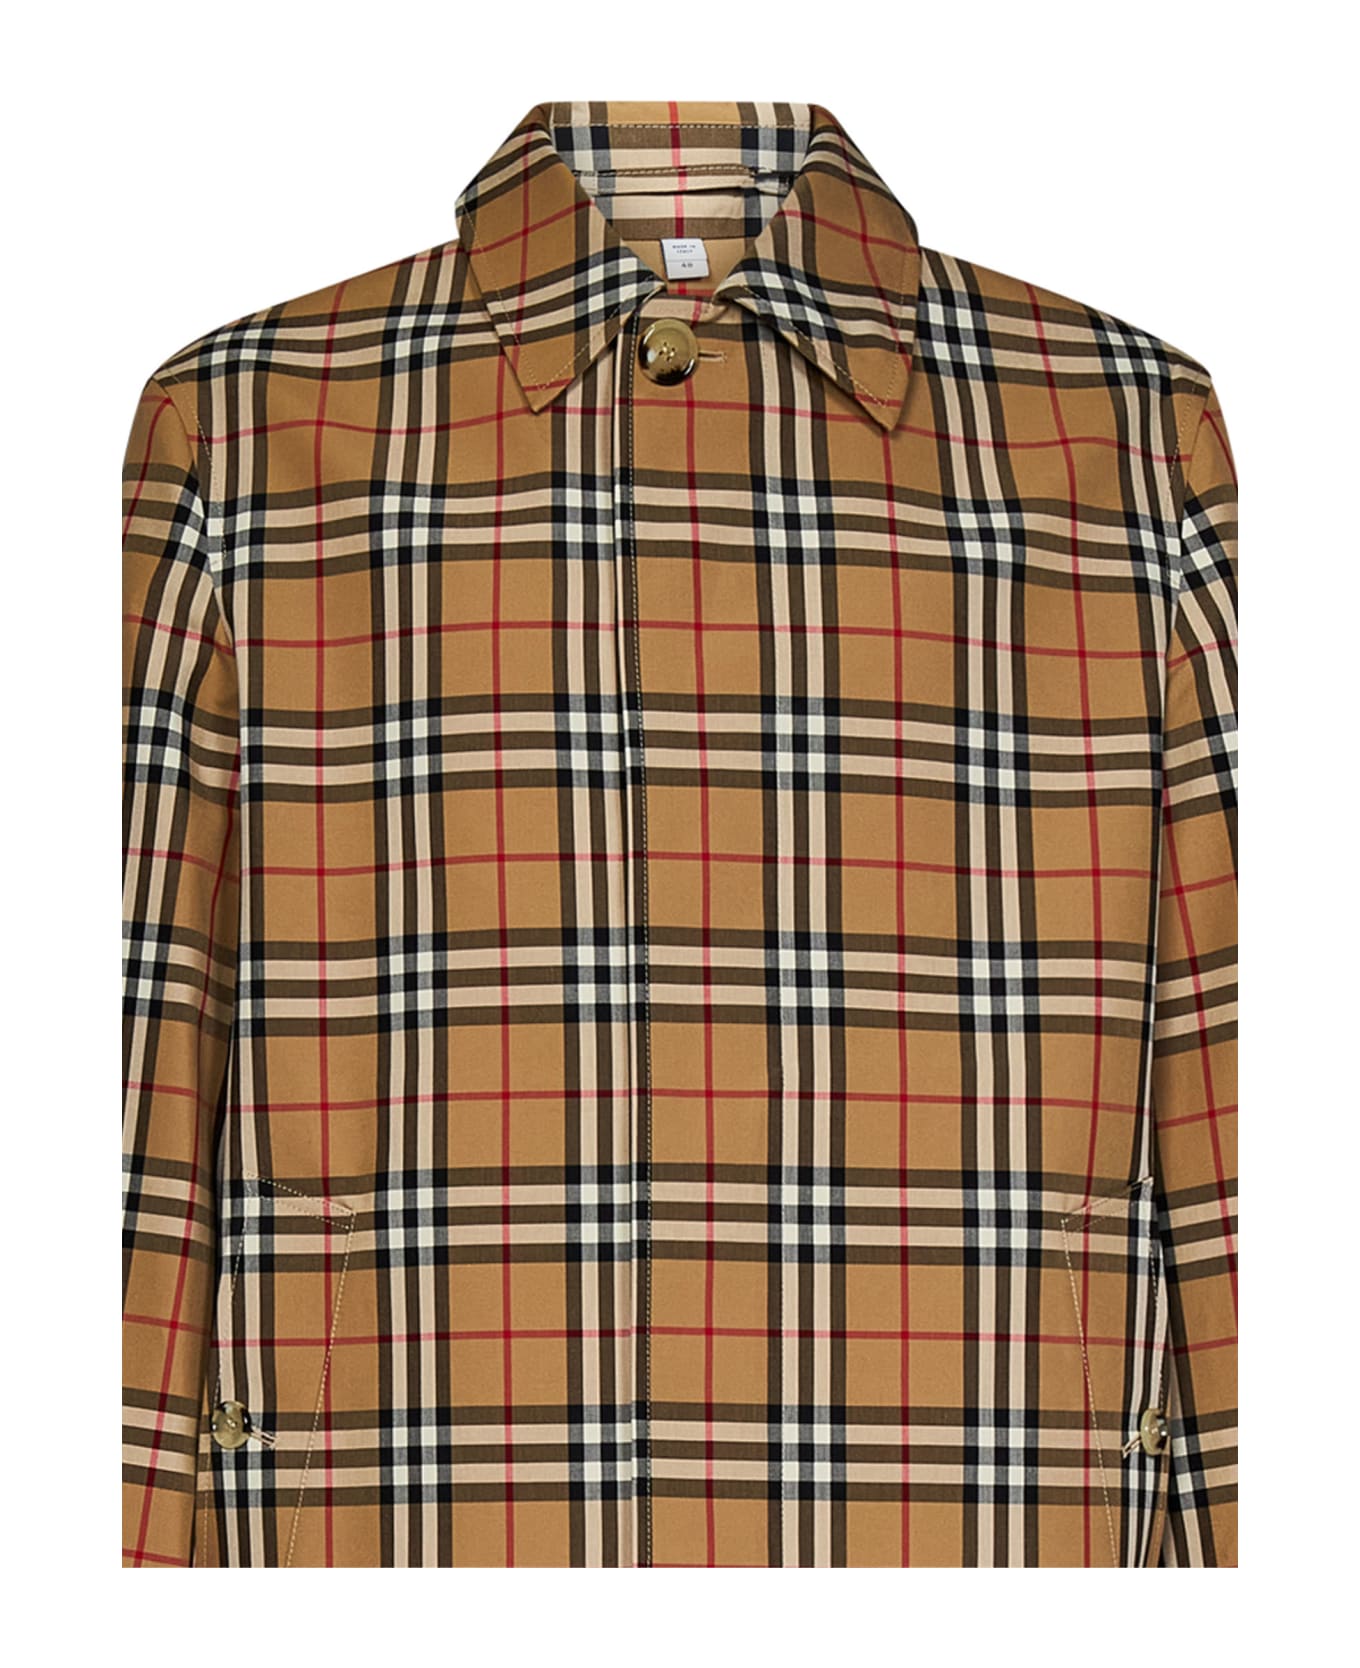 Burberry 'brookvale' Beige Coat With All-over Vintage Check Motif In Cotton Blend Man - Beige